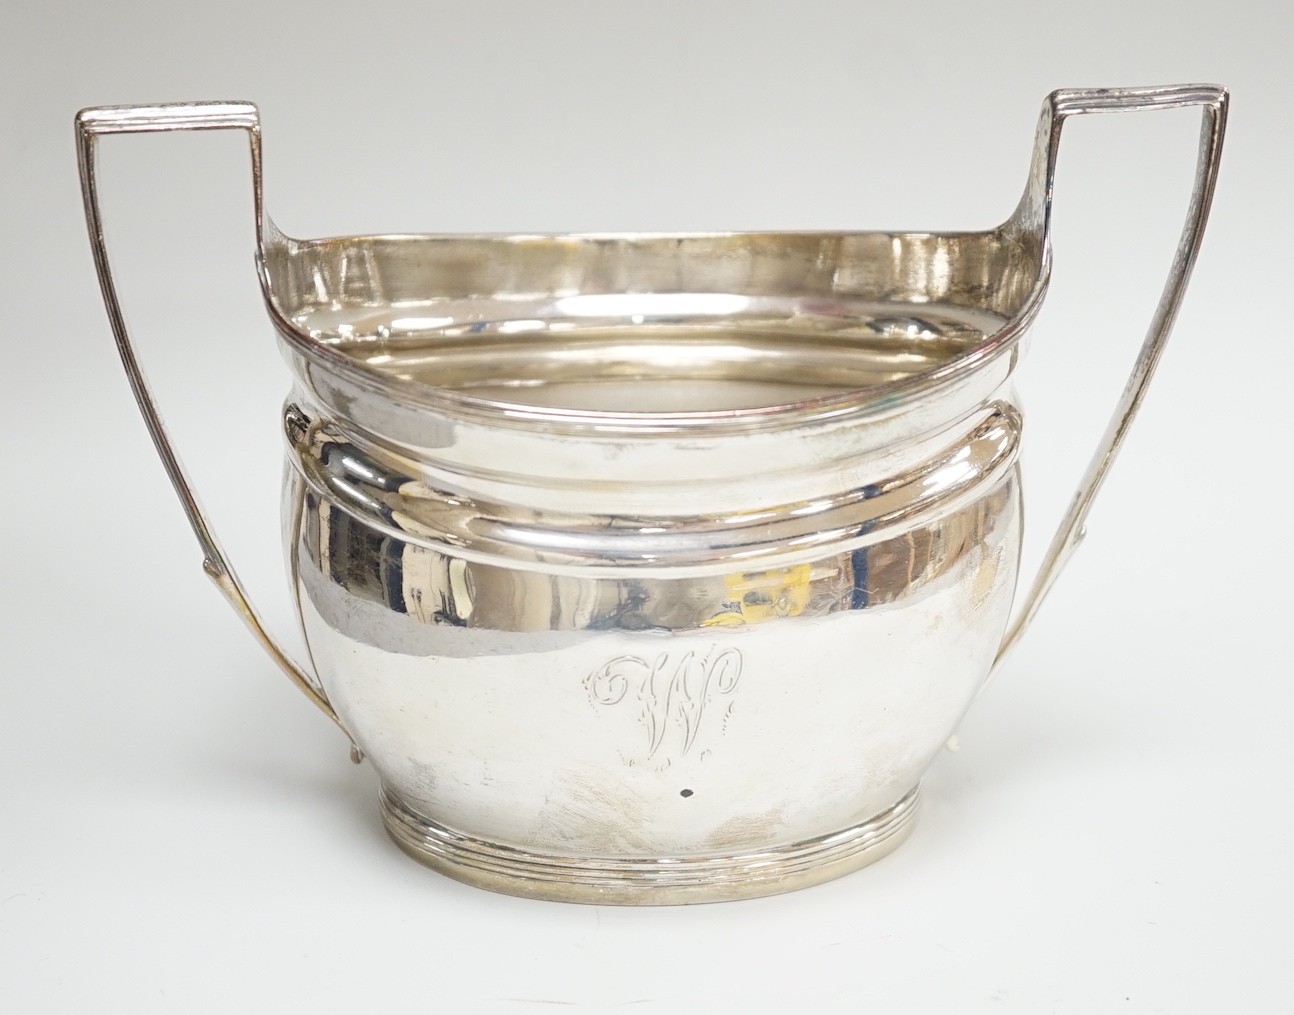 A George III silver two handled sugar bowl, by Thomas Wallis II, London, 1800, 15cm over handles, 6.4oz.                                                                                                                    